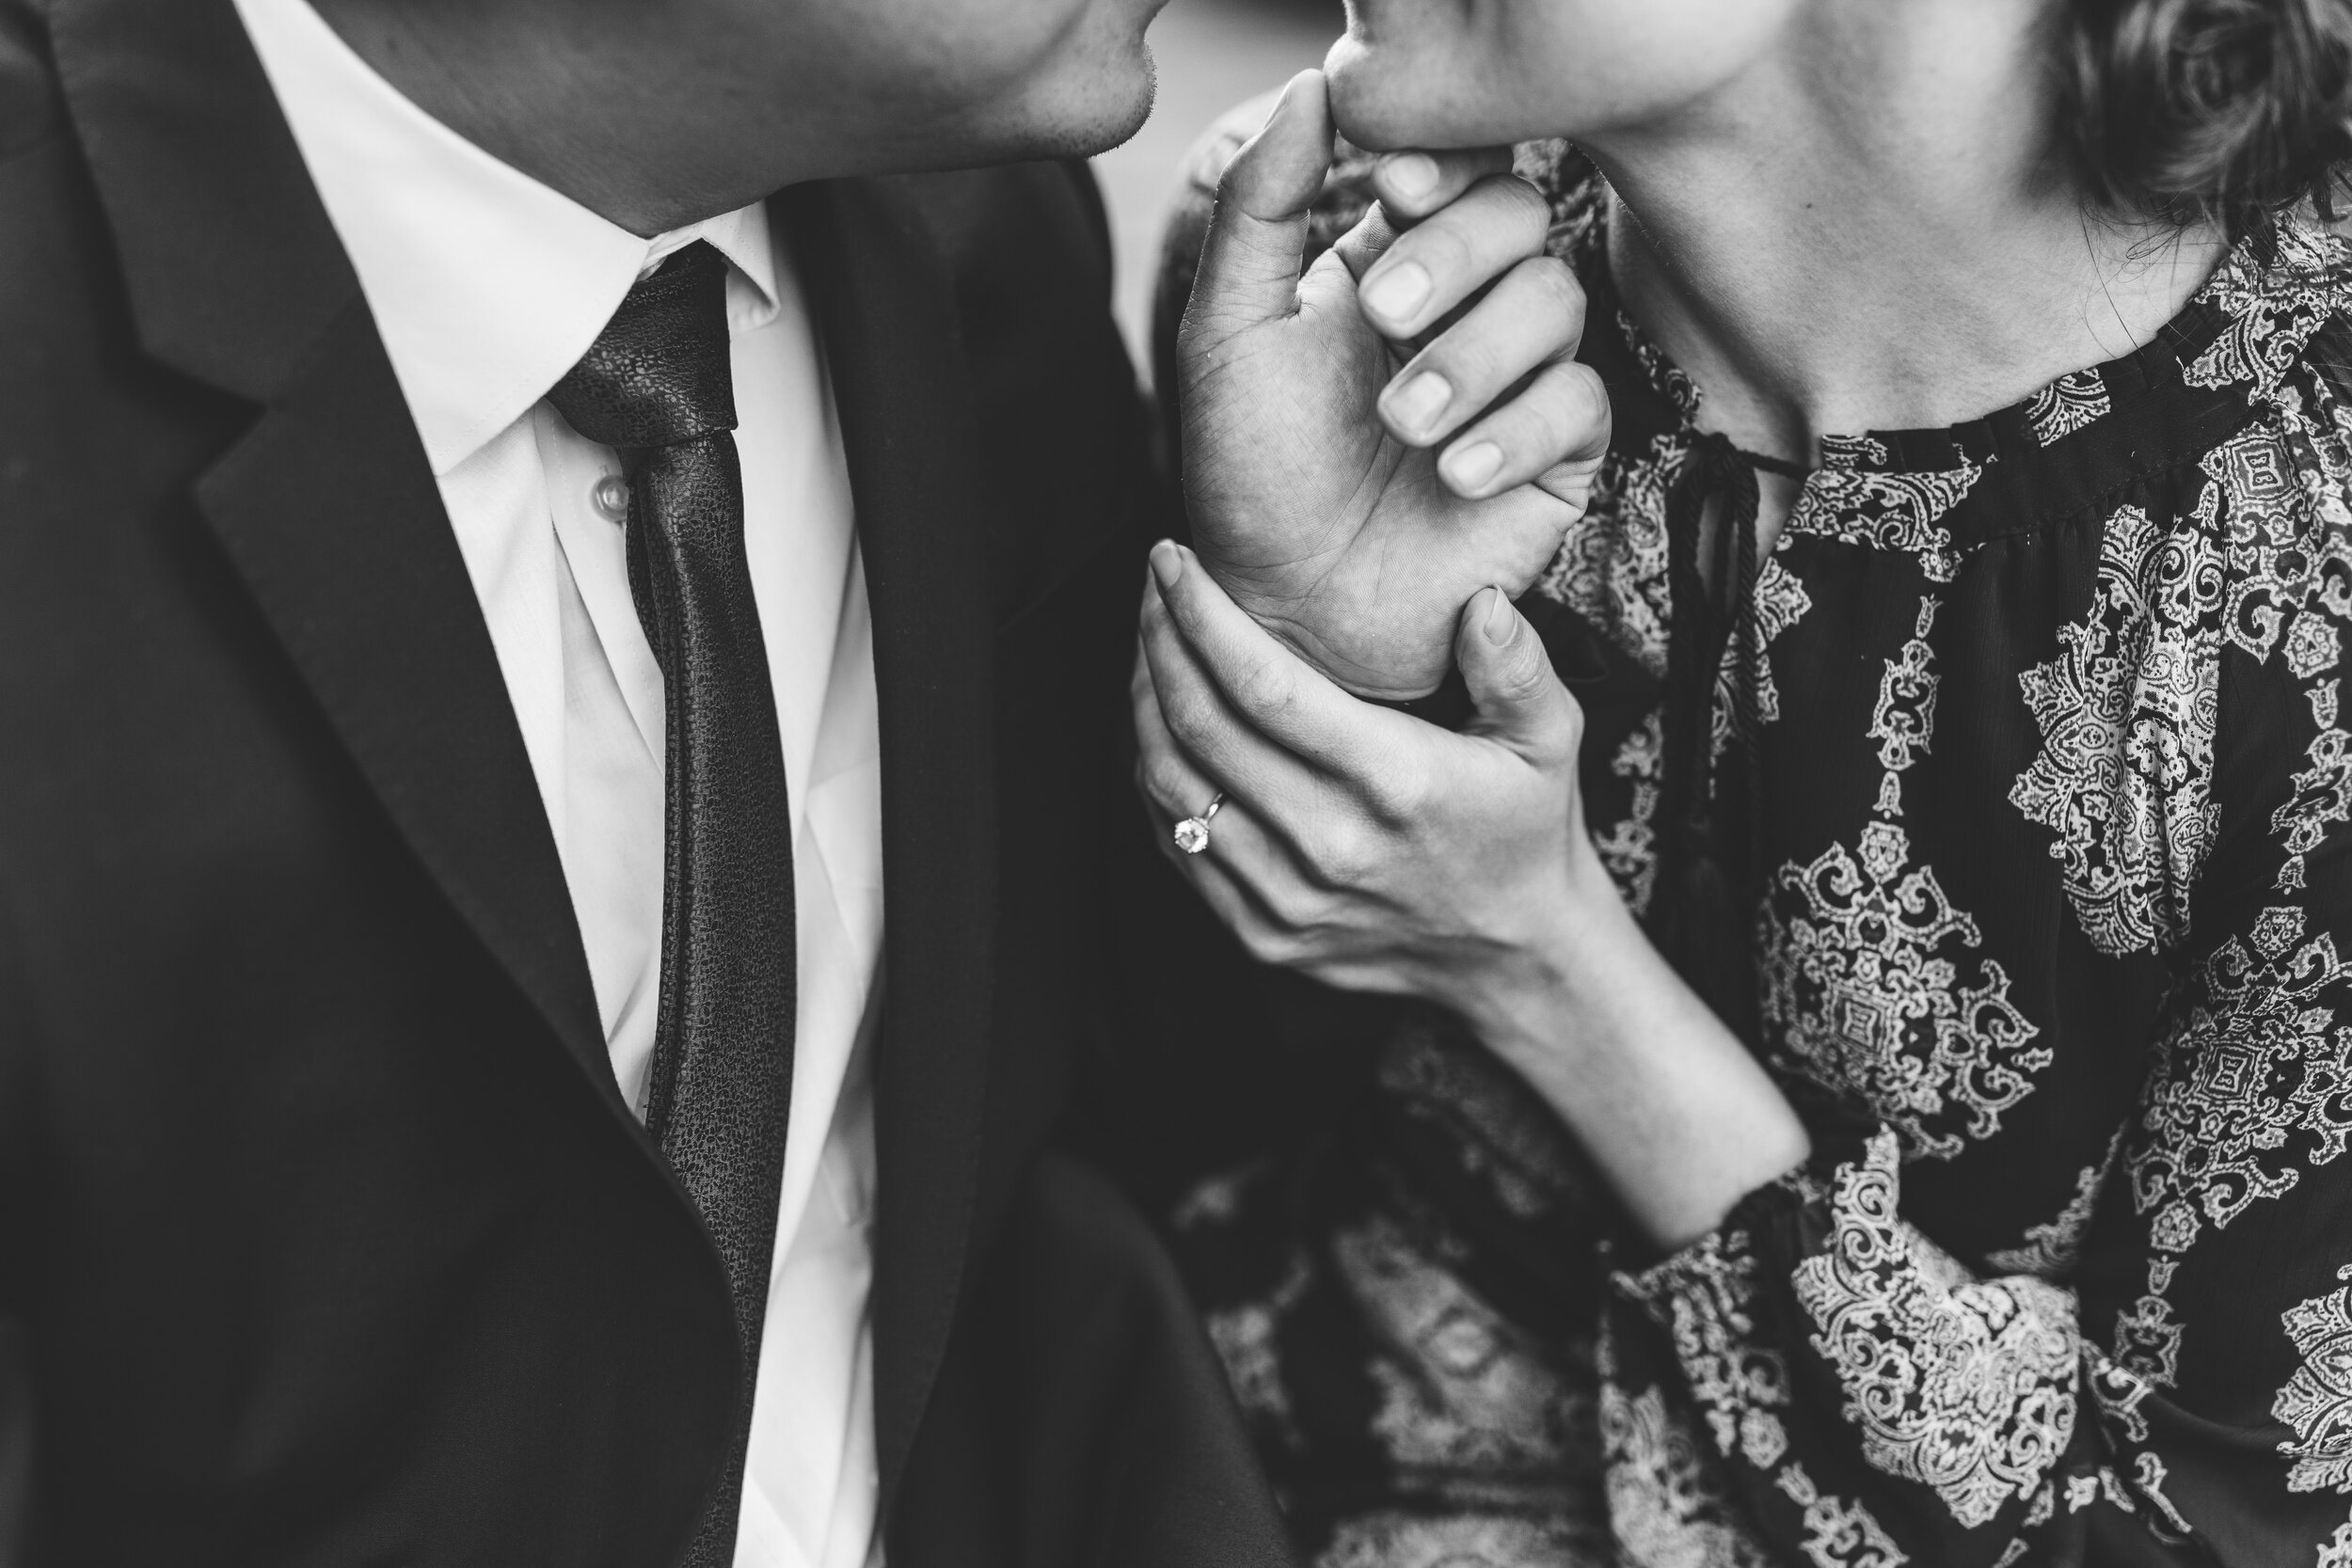 wichita-engaged-couple-holding-hands-engagement-ring-black-white.jpg